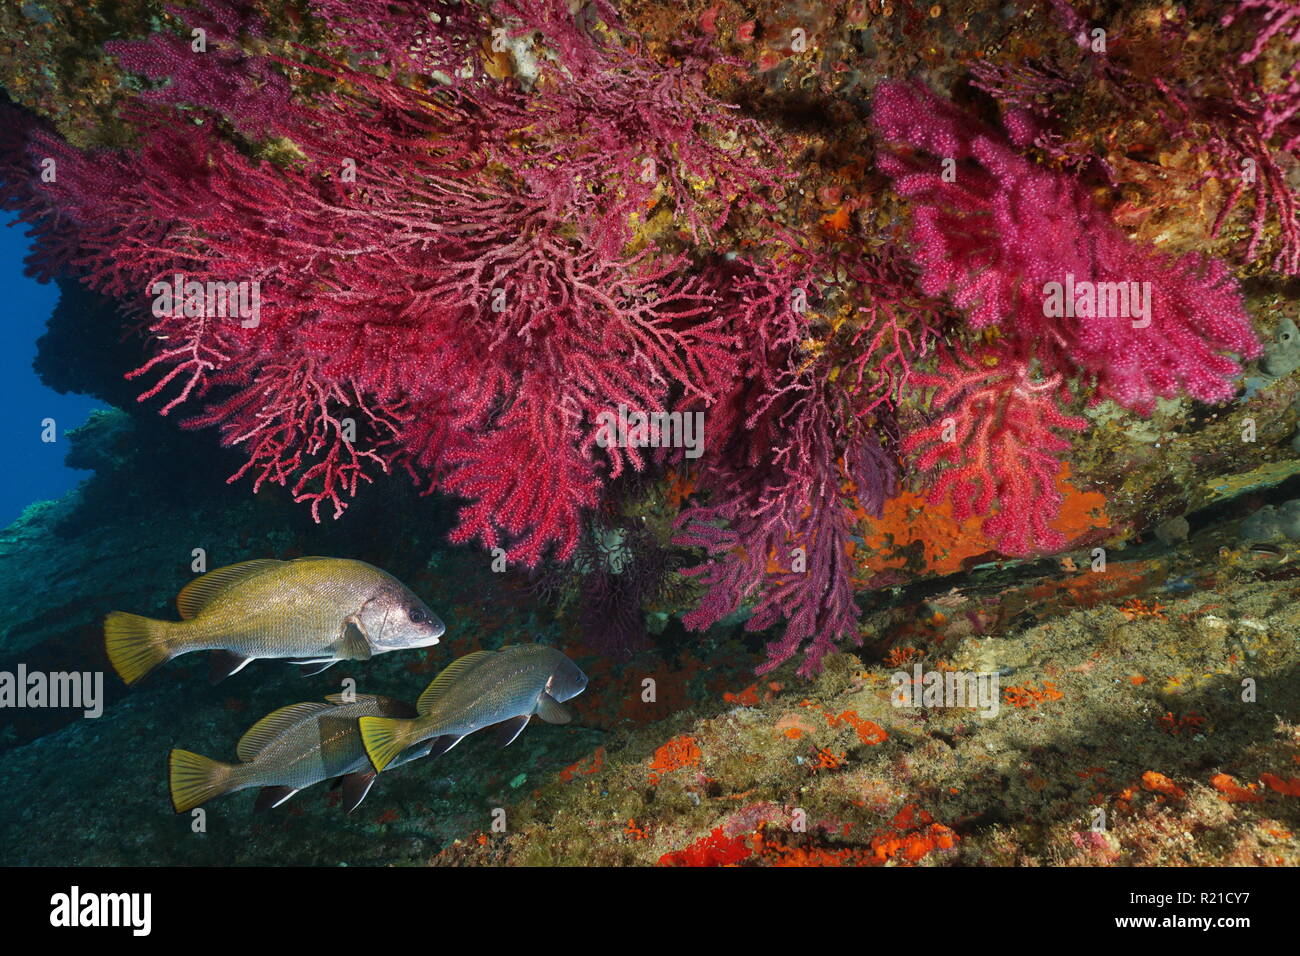 Red gorgonian soft coral with corb fish underwater Mediterranean sea, Cap de Creus, Costa Brava, Catalonia, Spain Stock Photo